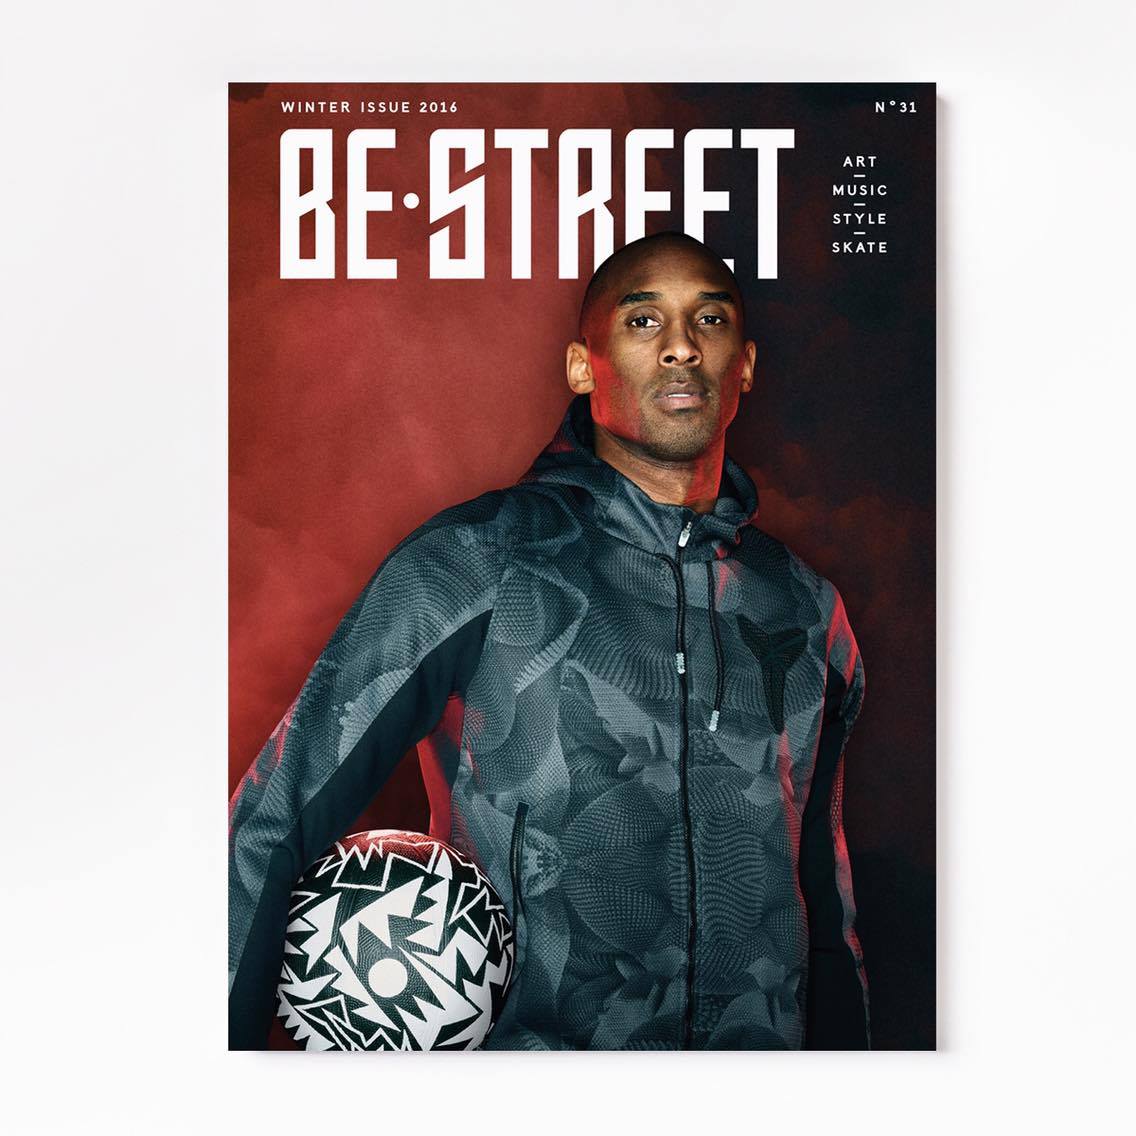 Kobe Bryant - NIKE x BeStreet thumbnail.